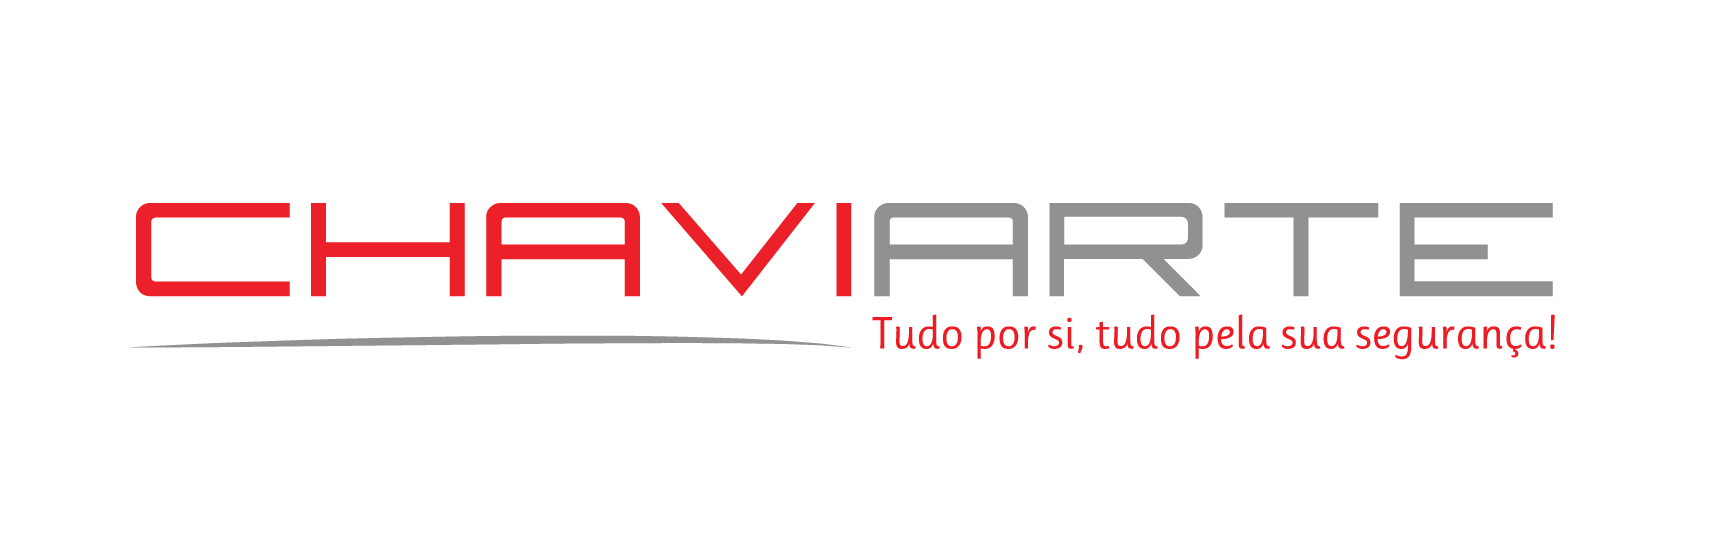 Chaviarte Chaves, Lda logo